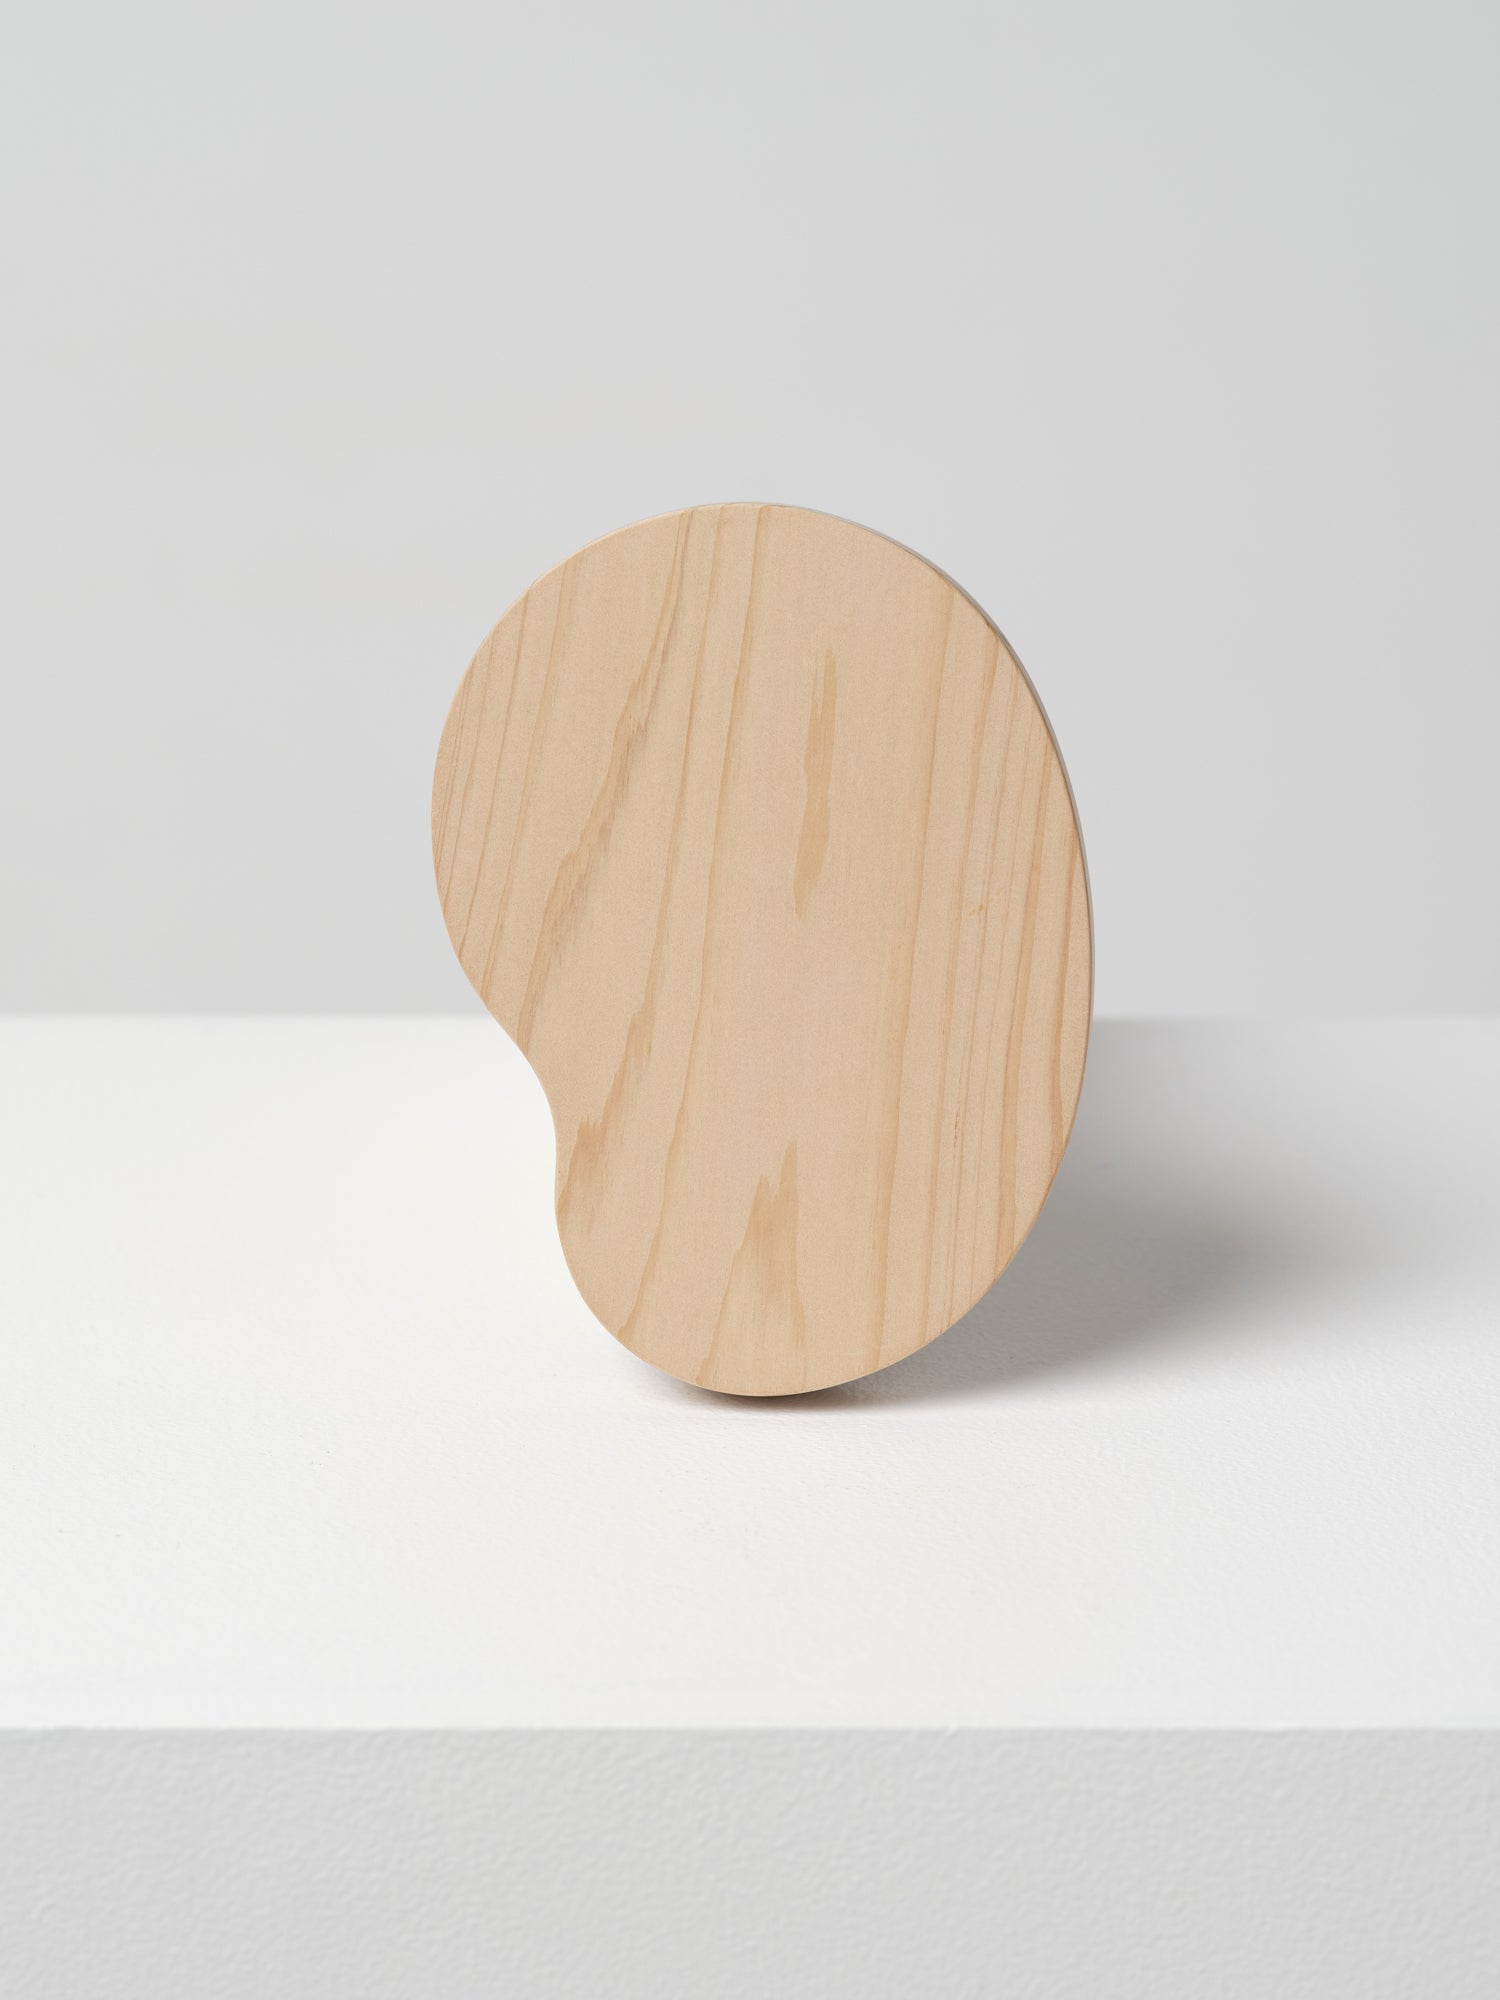 Little Bean Shaped Wooden Chopping Boards